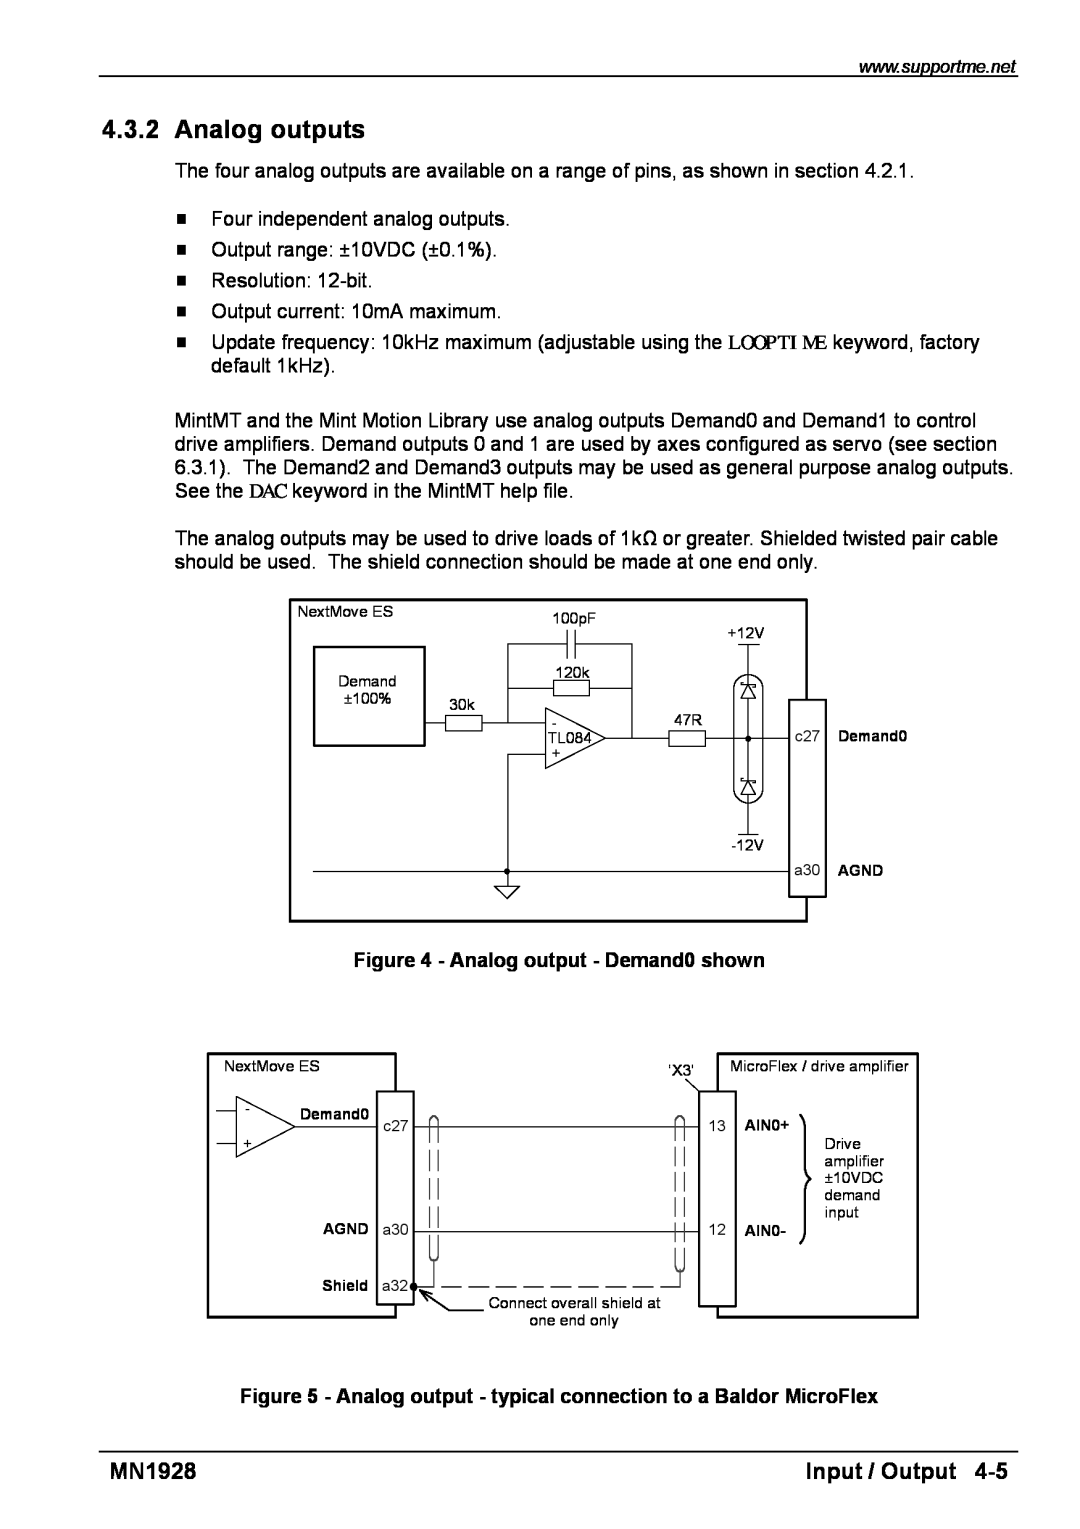 Baldor MN1928 installation manual Analog outputs, Input / Output, Analog output - Demand0 shown 